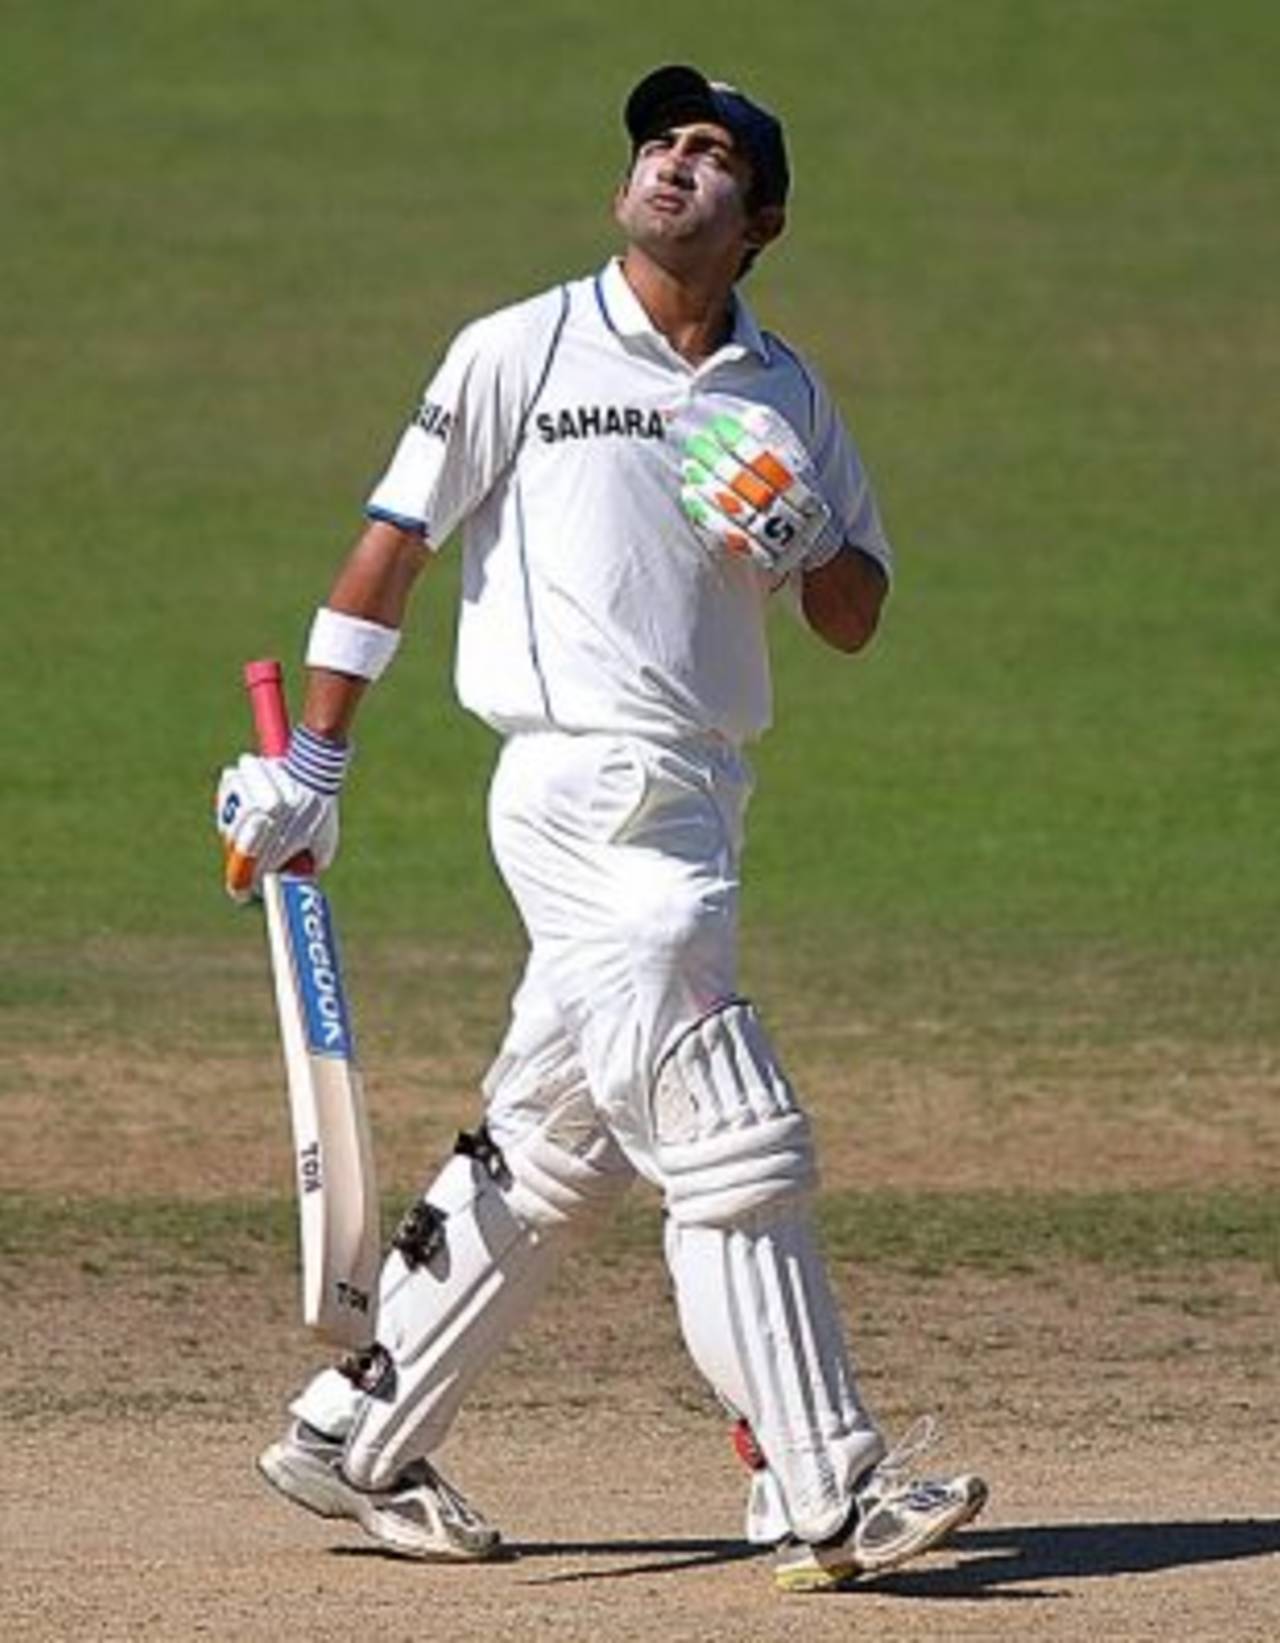 Gautam Gambhir reaches fifty, New Zealand v India, 2nd Test, Napier, 4th day, March 29, 2009